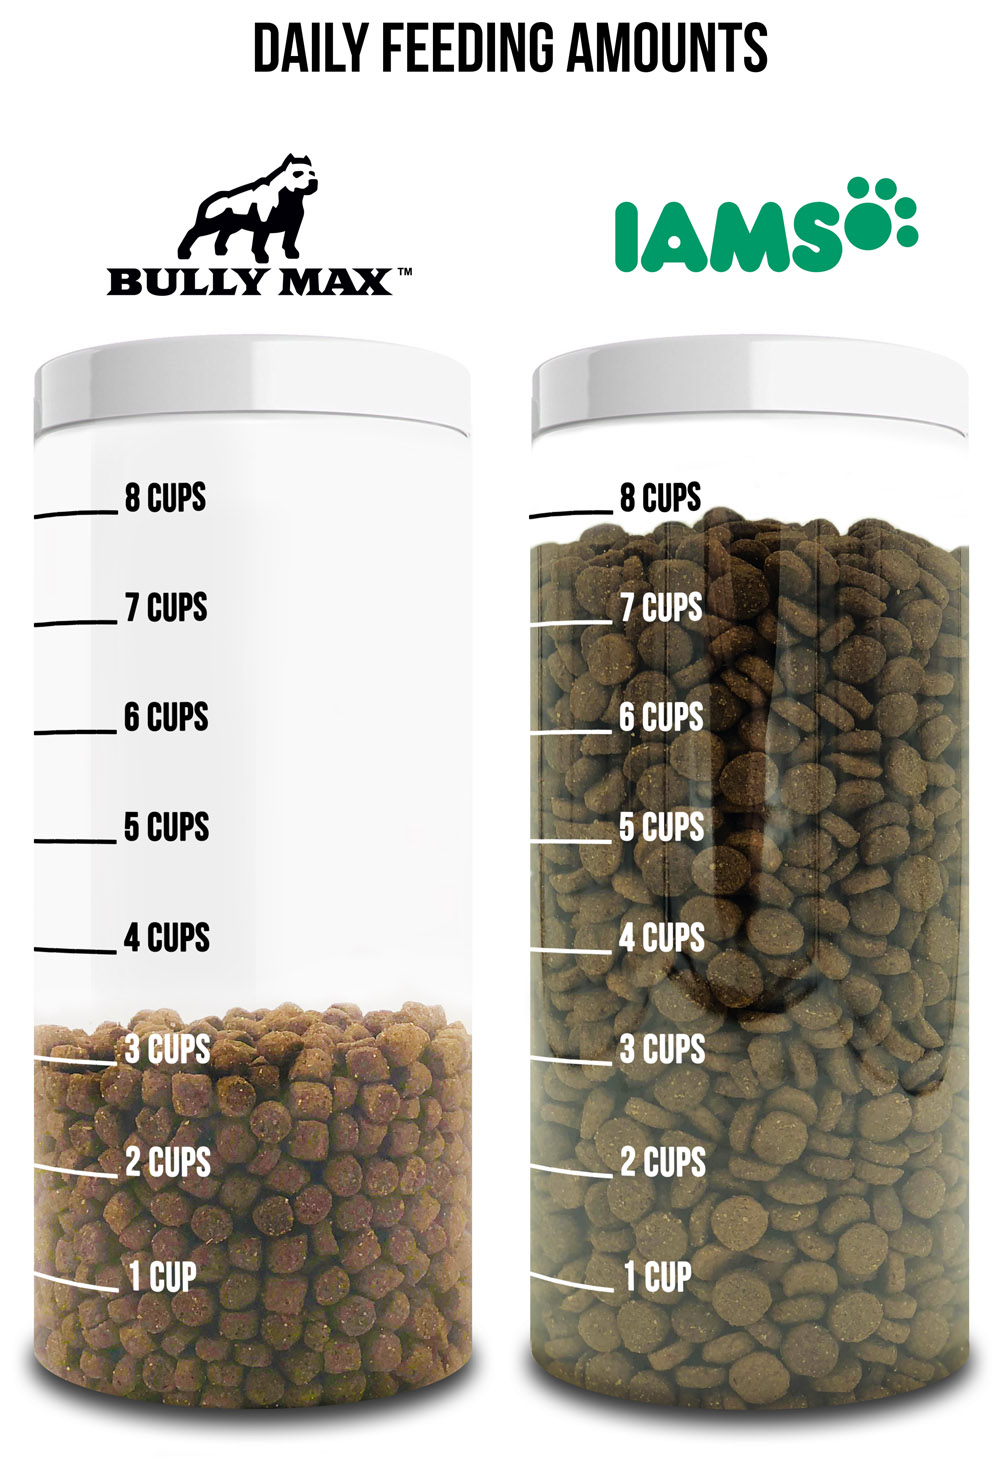 iams-dog-food-comparison-bully-max.jpg